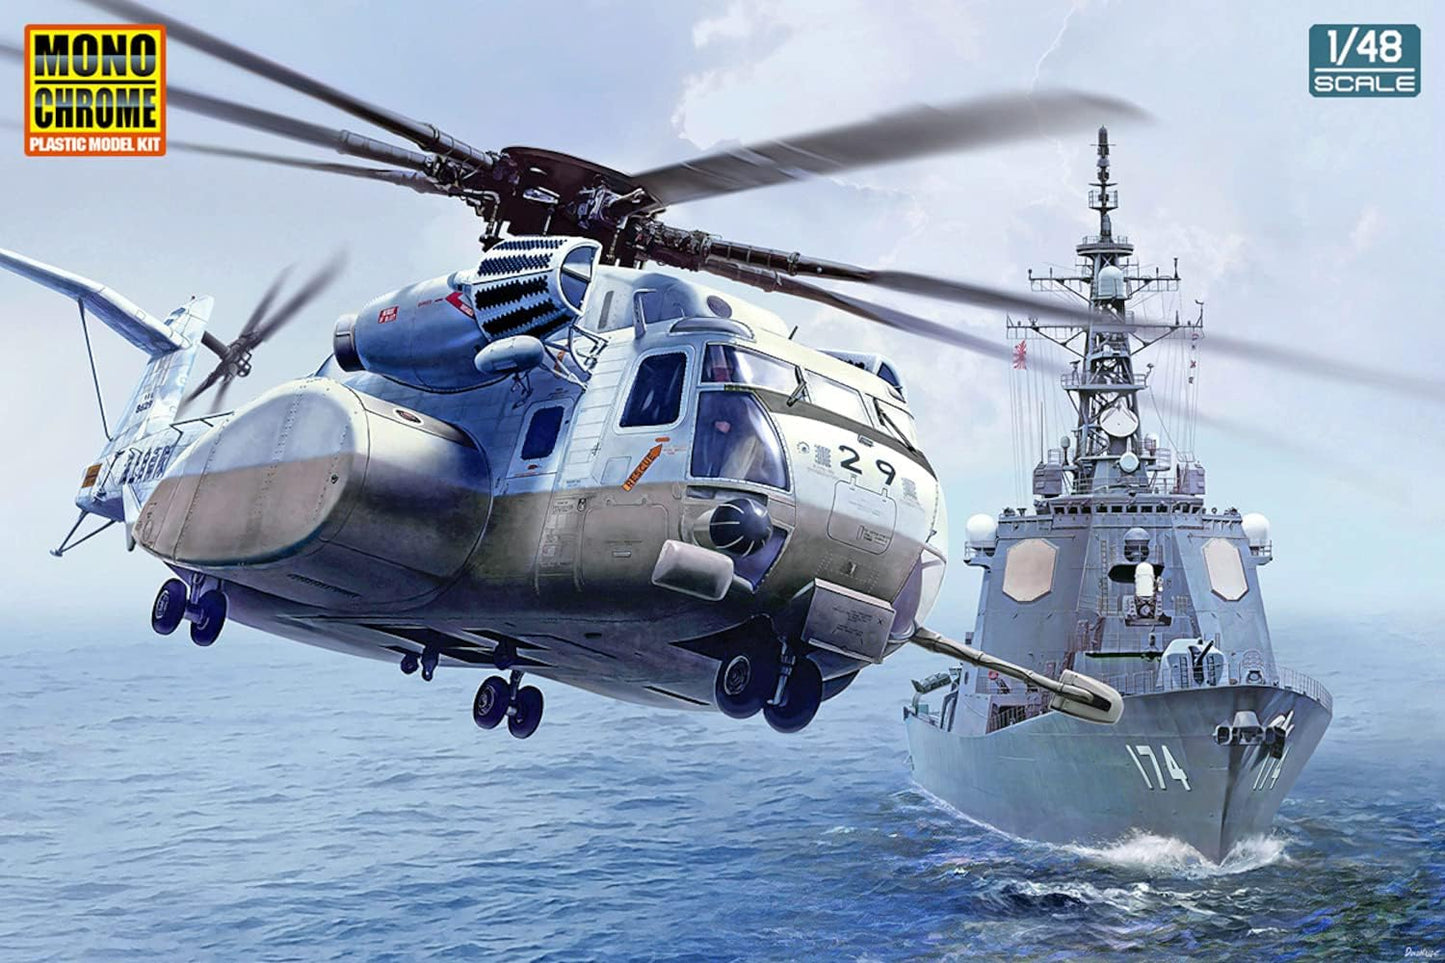 MONO CHROME 1/48 MH-53E SEA DRAGON JMSDF